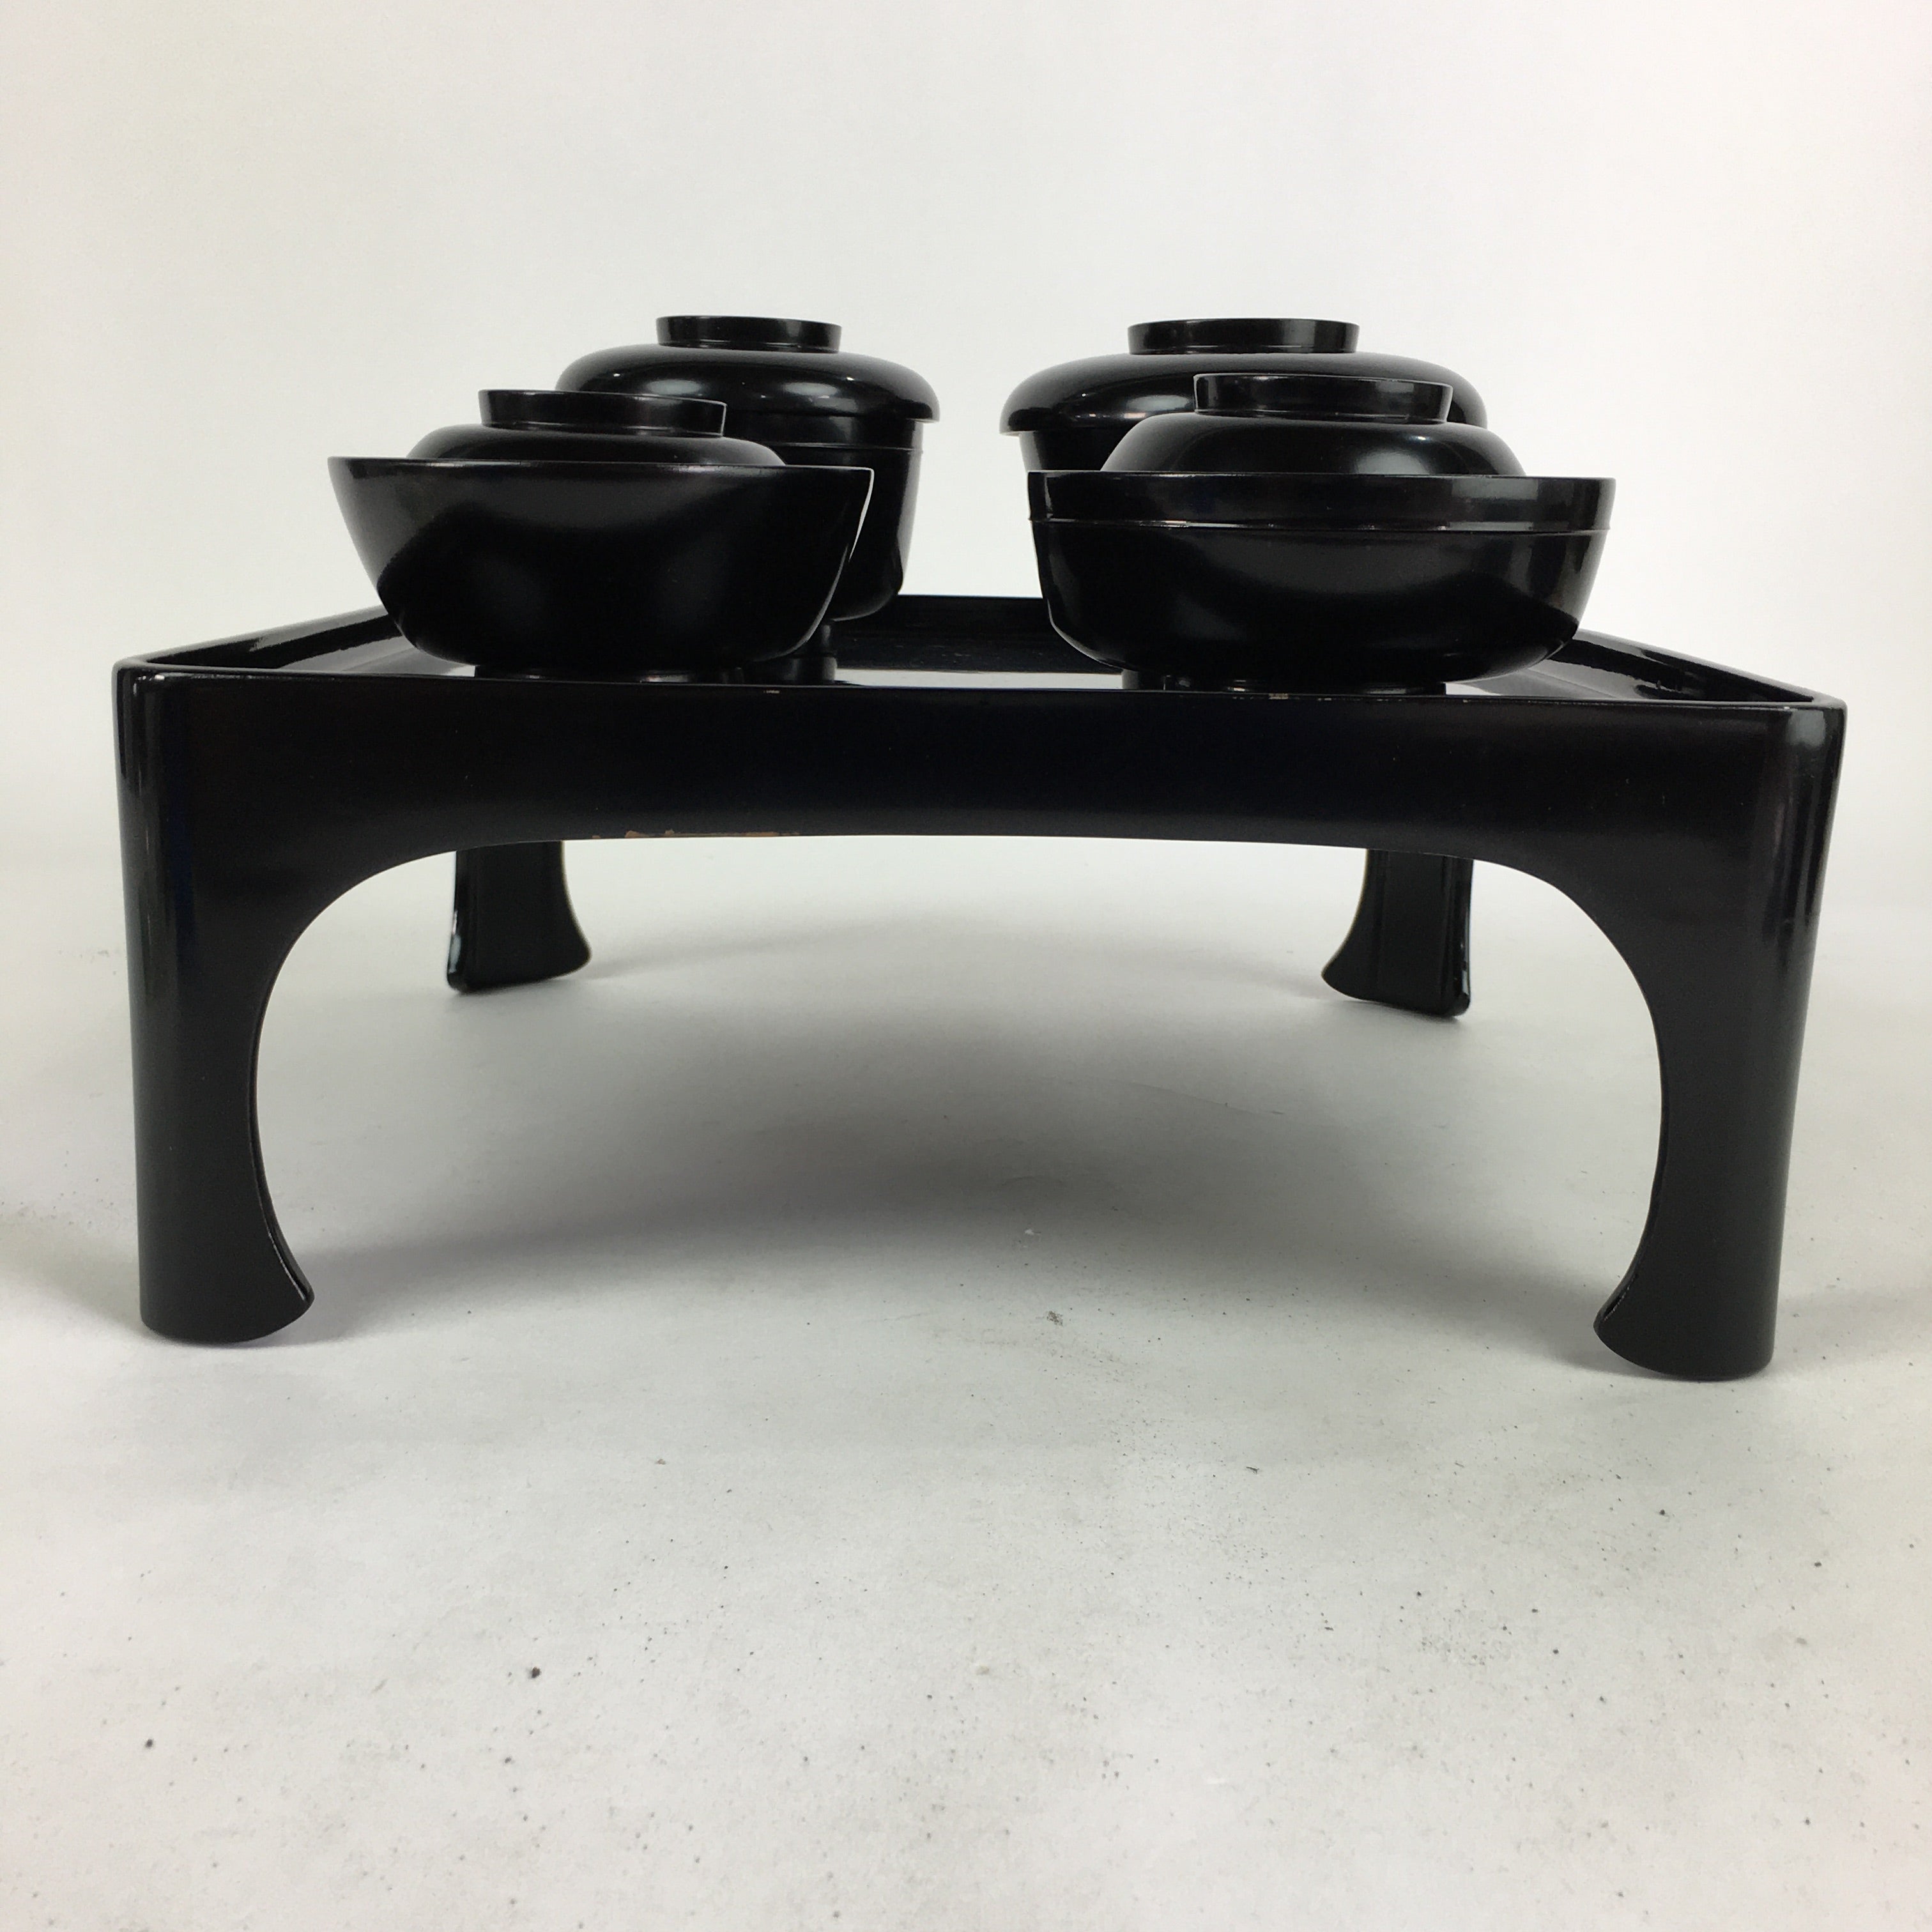 Japanese Wooden Legged Tray Lacquered Table Lidded Bowls Set Veg Ozen UR680